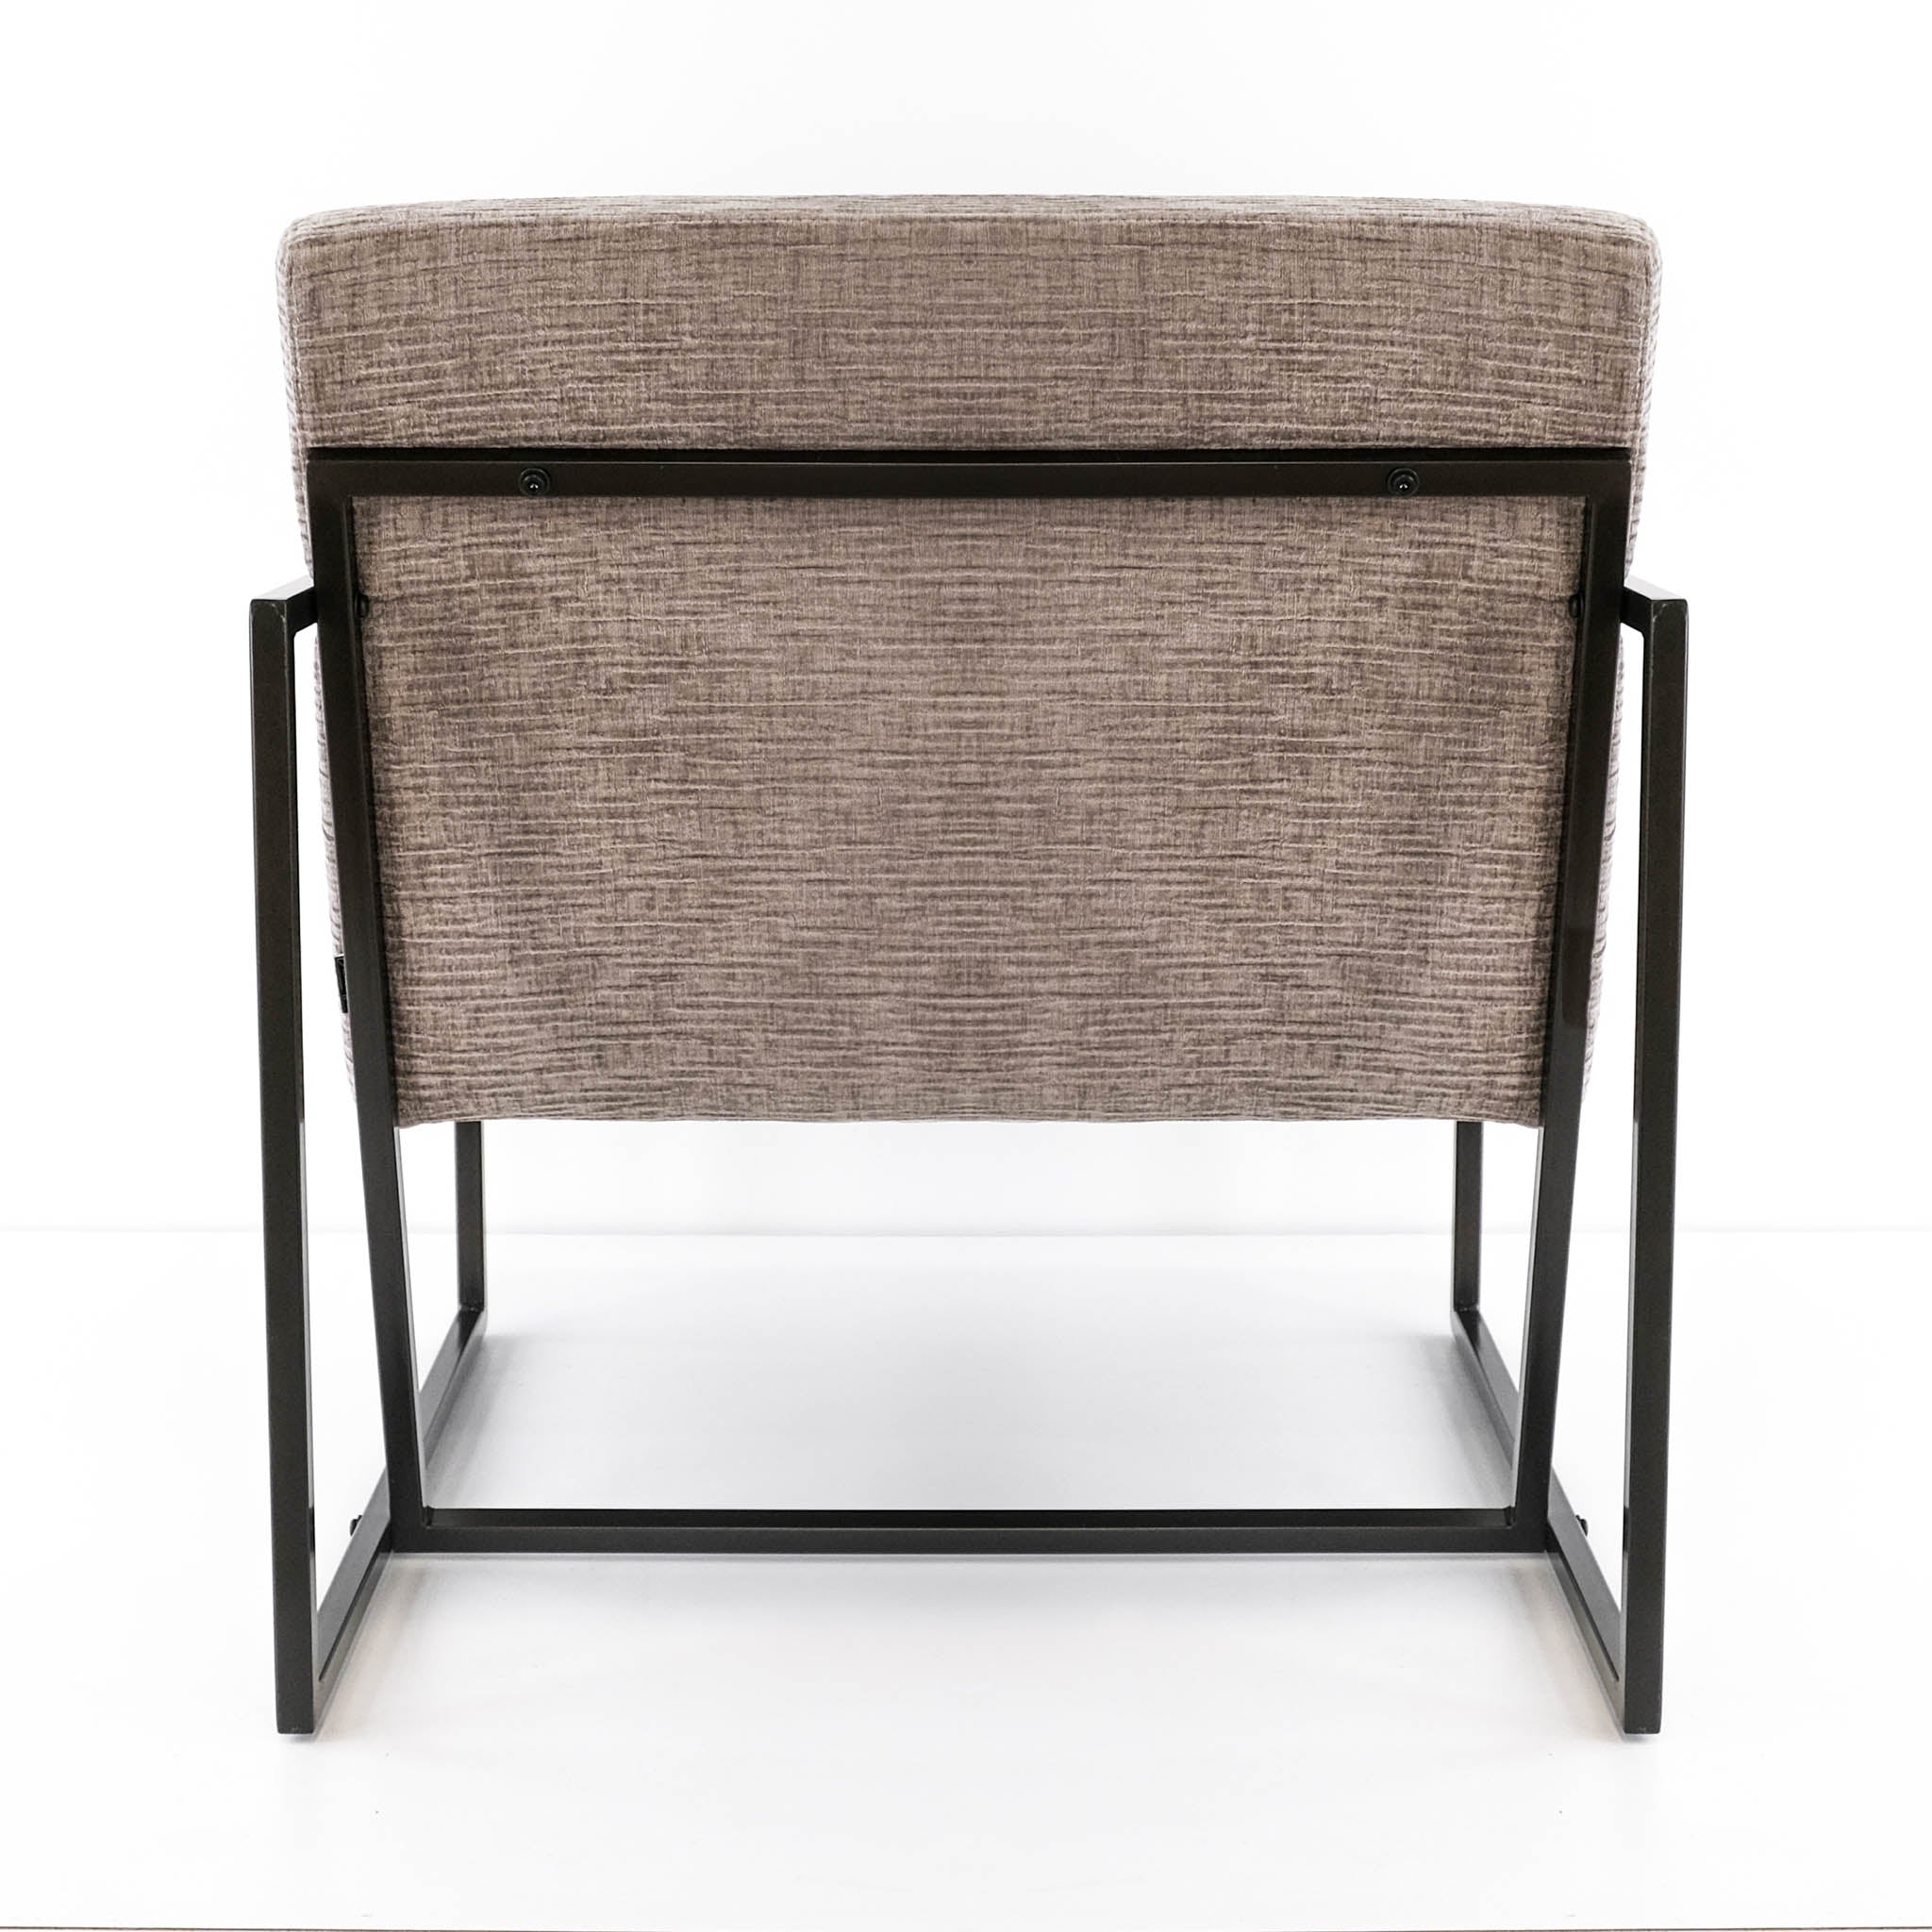 Tobacco colour textured chenille modern accent chair.